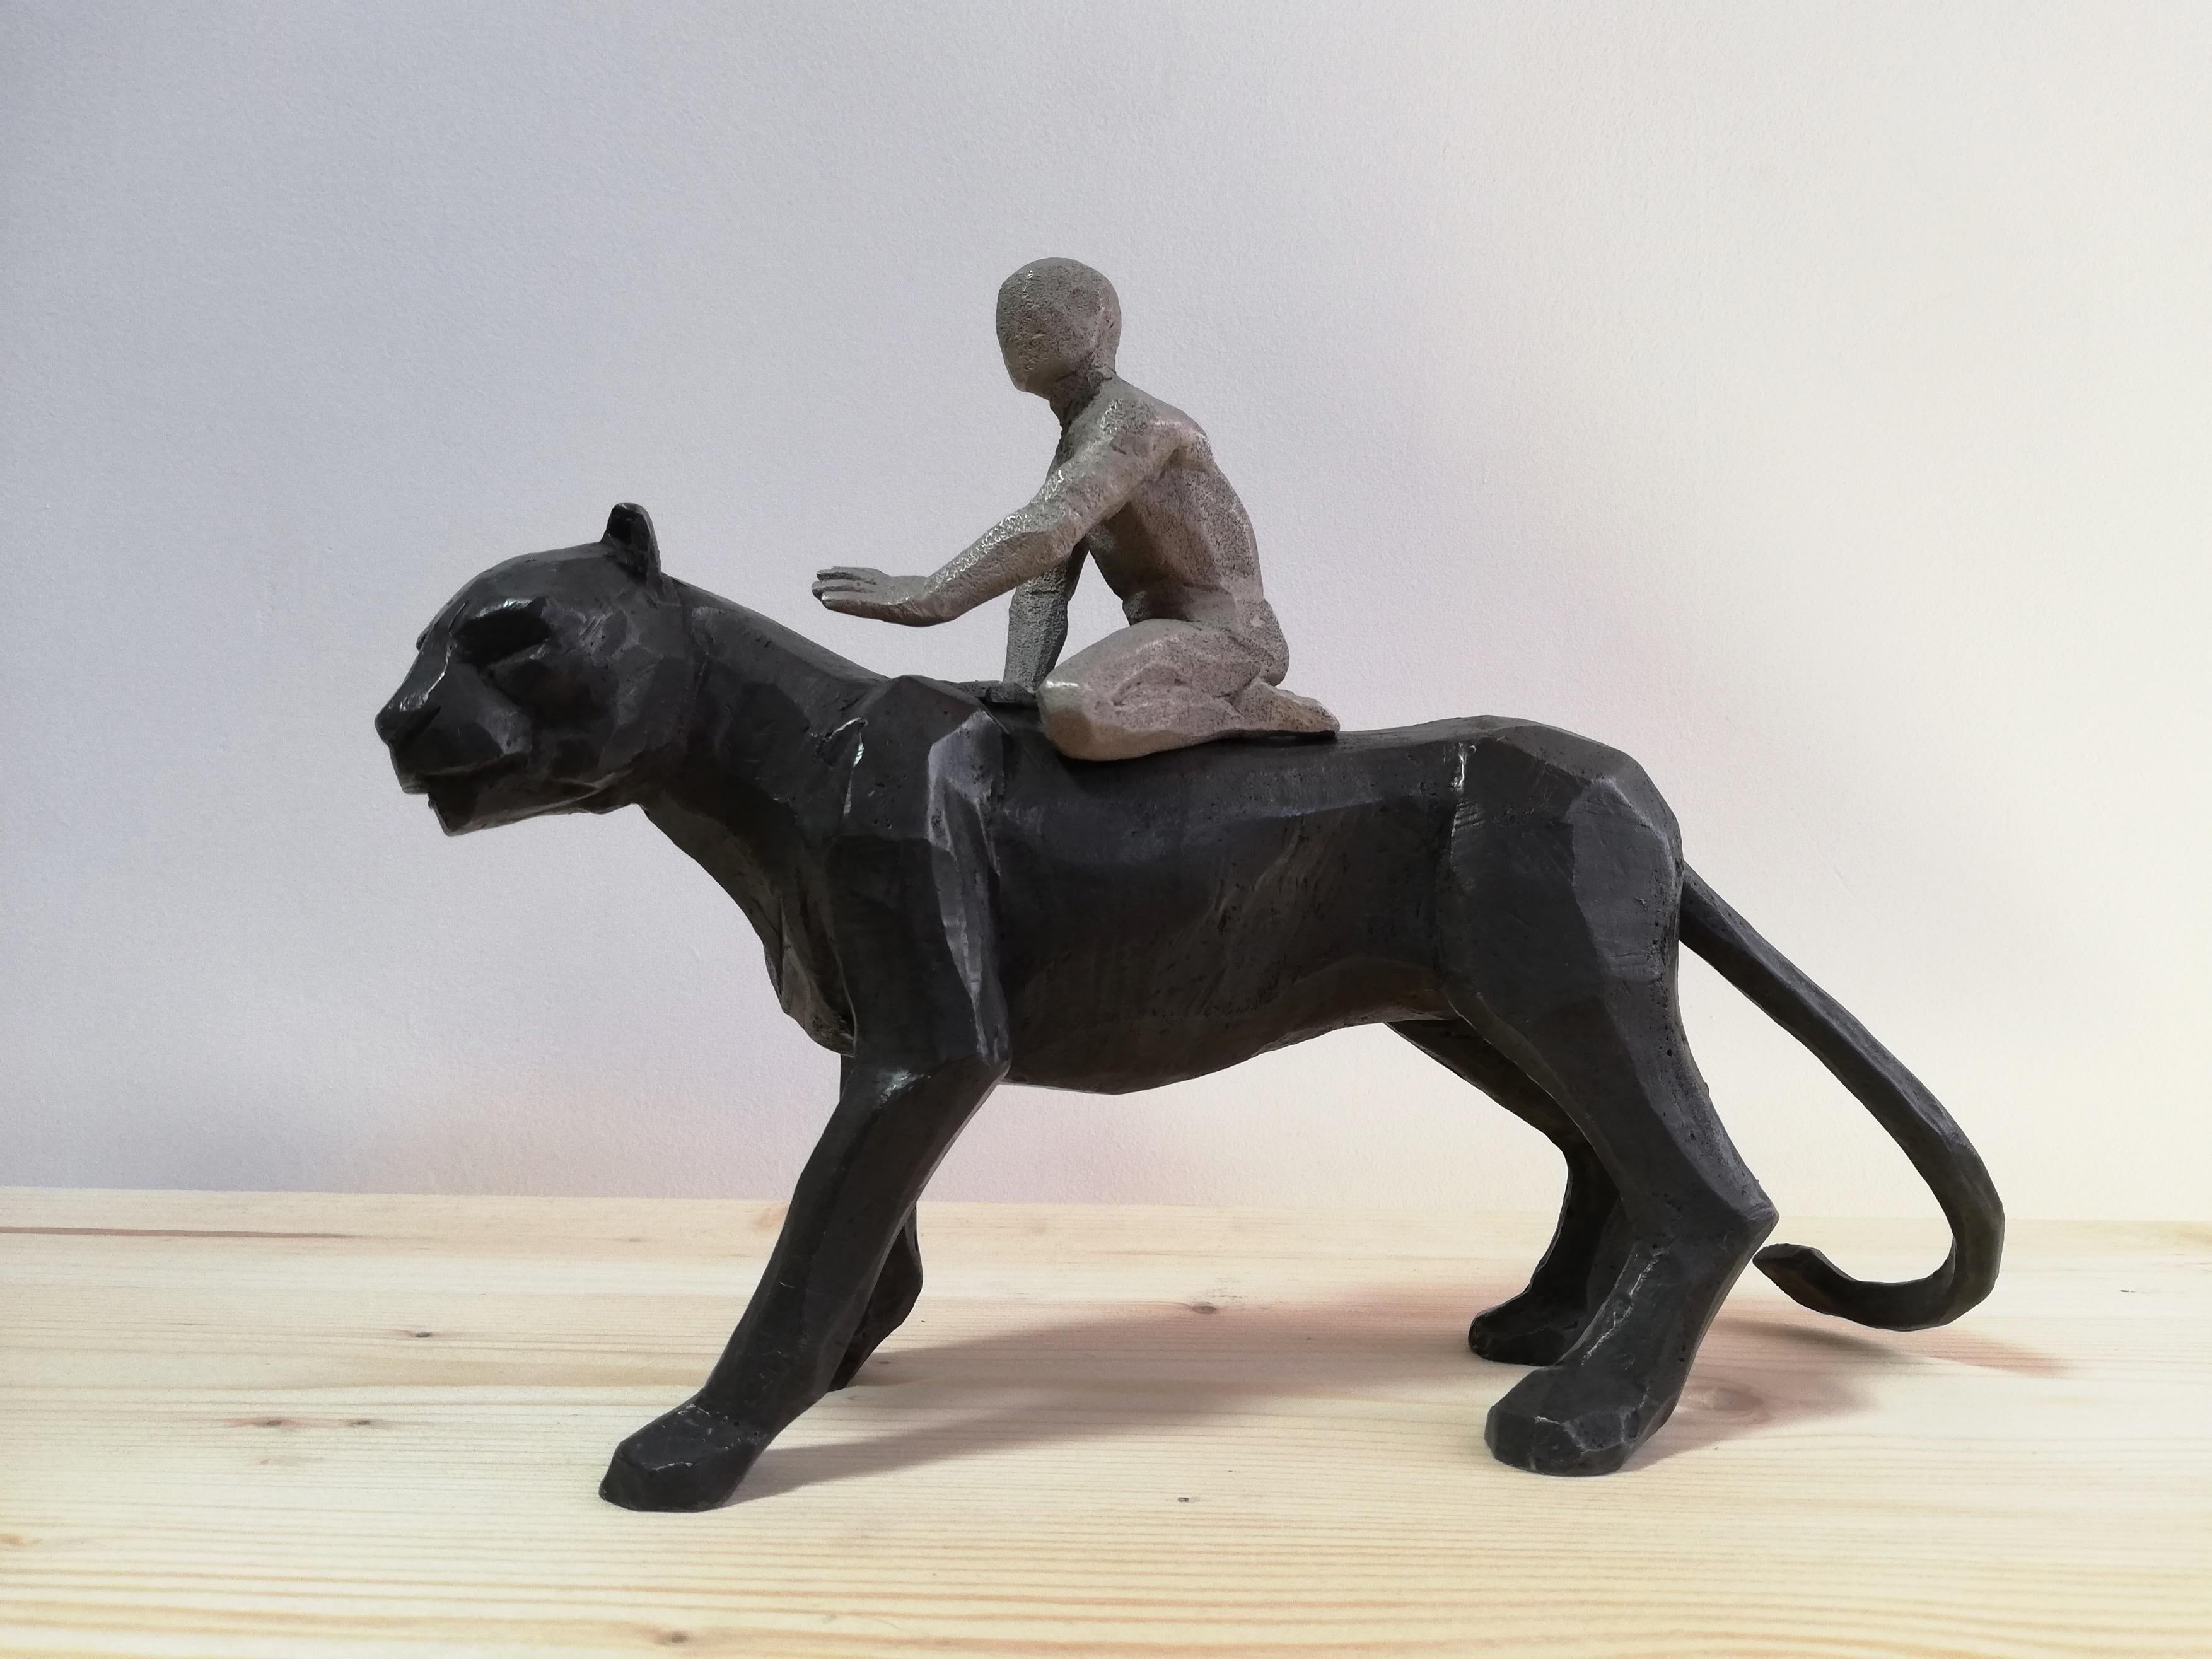 Passeur d'Ames bronze sculpture of a boy riding on a black panther's back  - Sculpture by Cyrille André